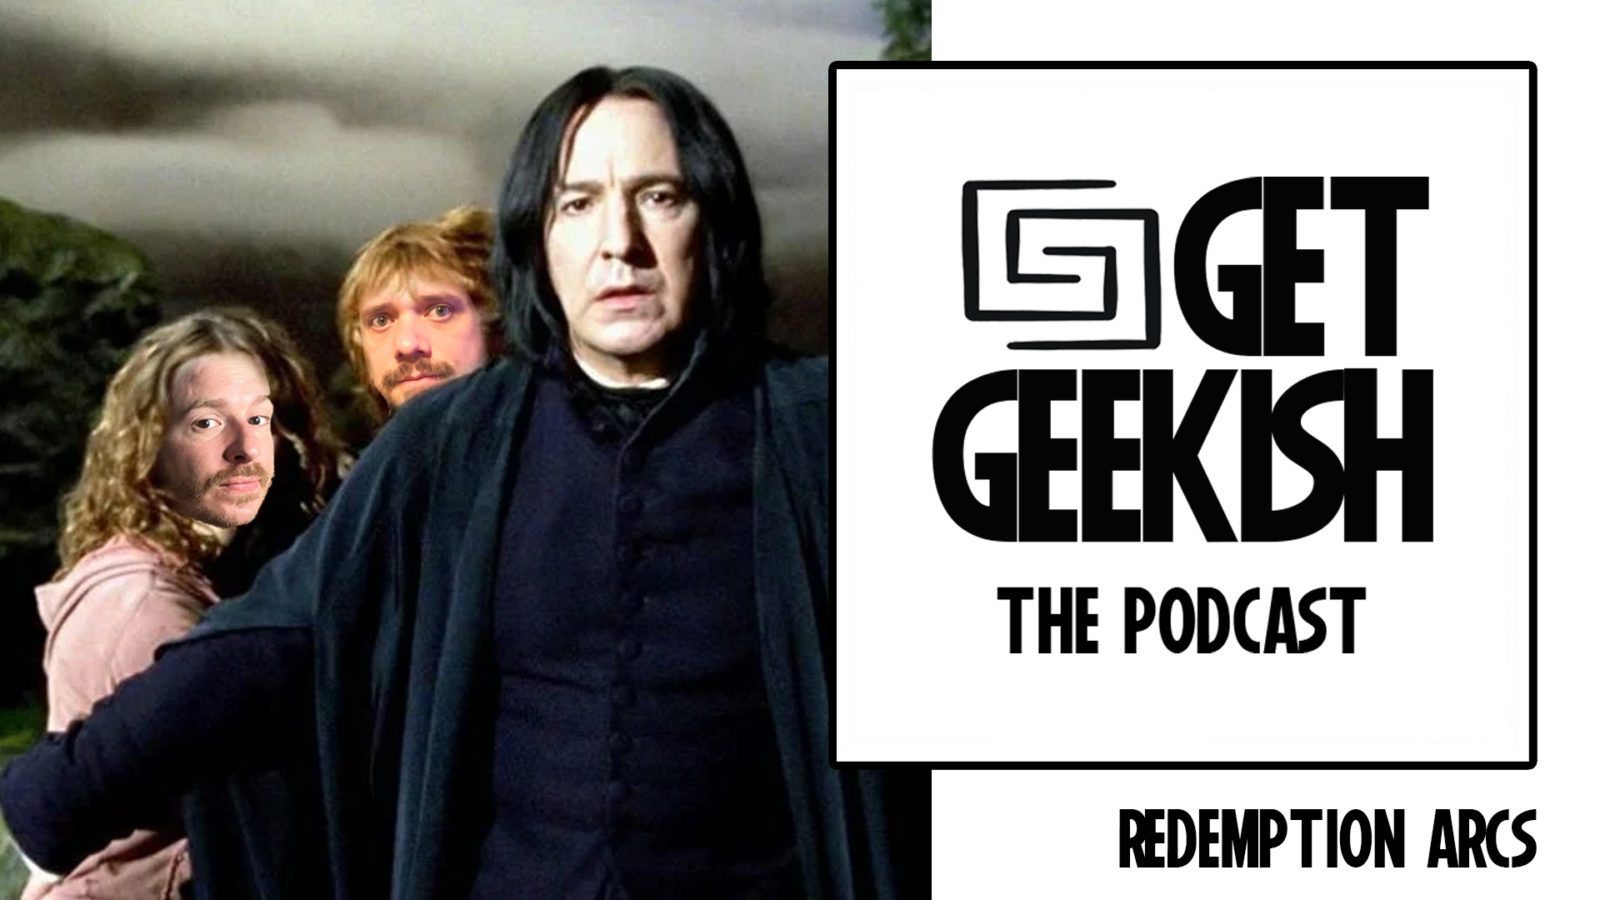 Get-Geekish-The-Podcast-REDEMPTION_ARCs